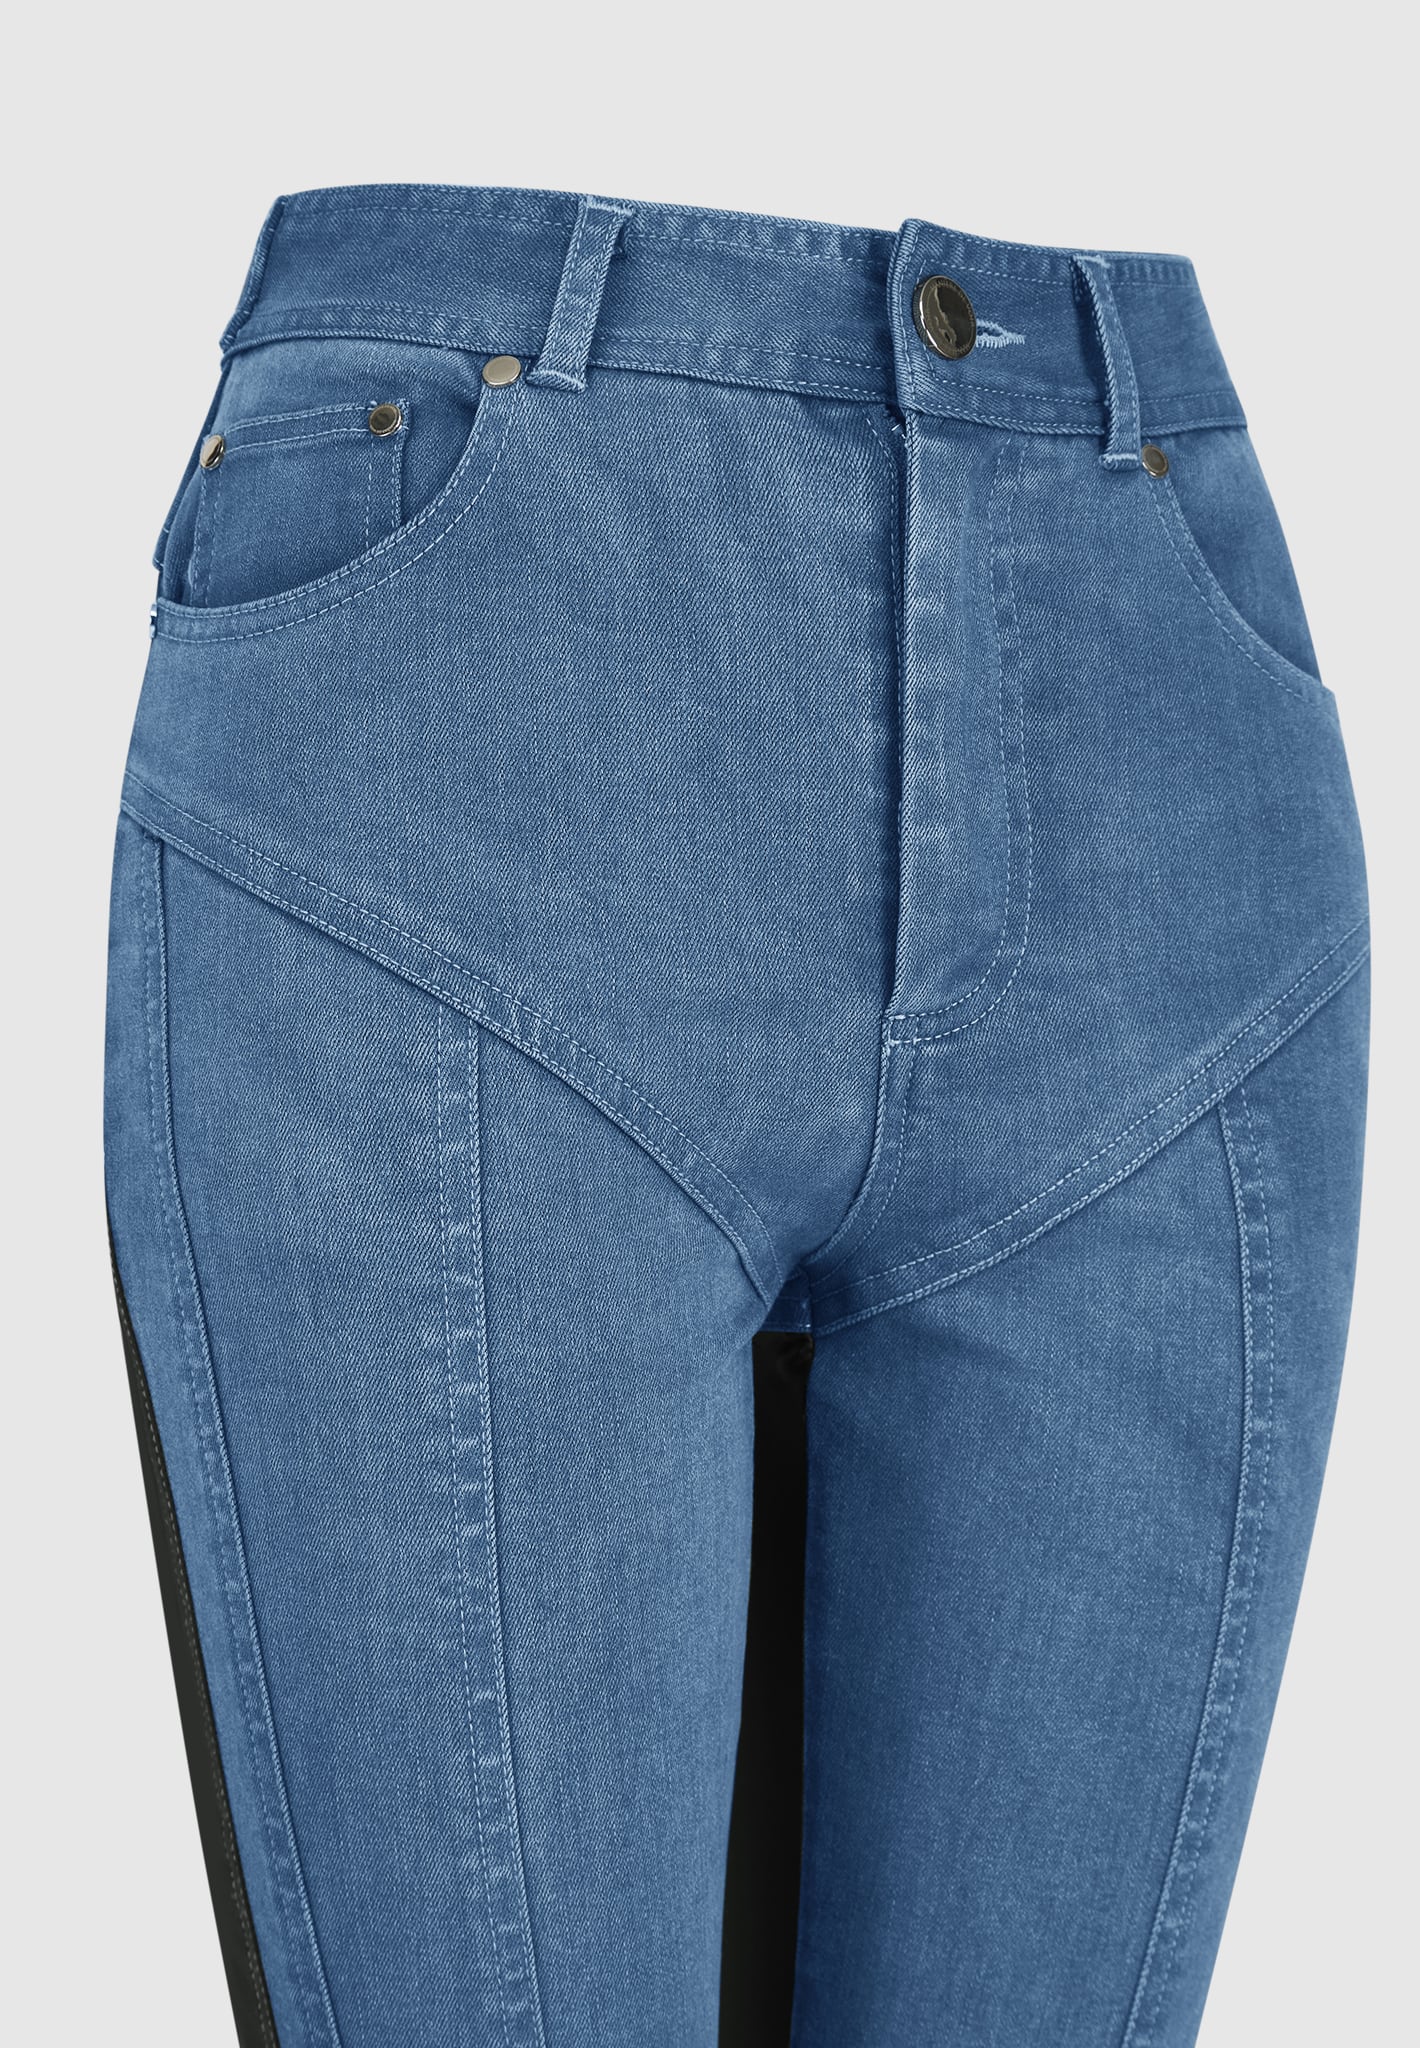 Vegan Leather Contour Skinny Jeans - Blue